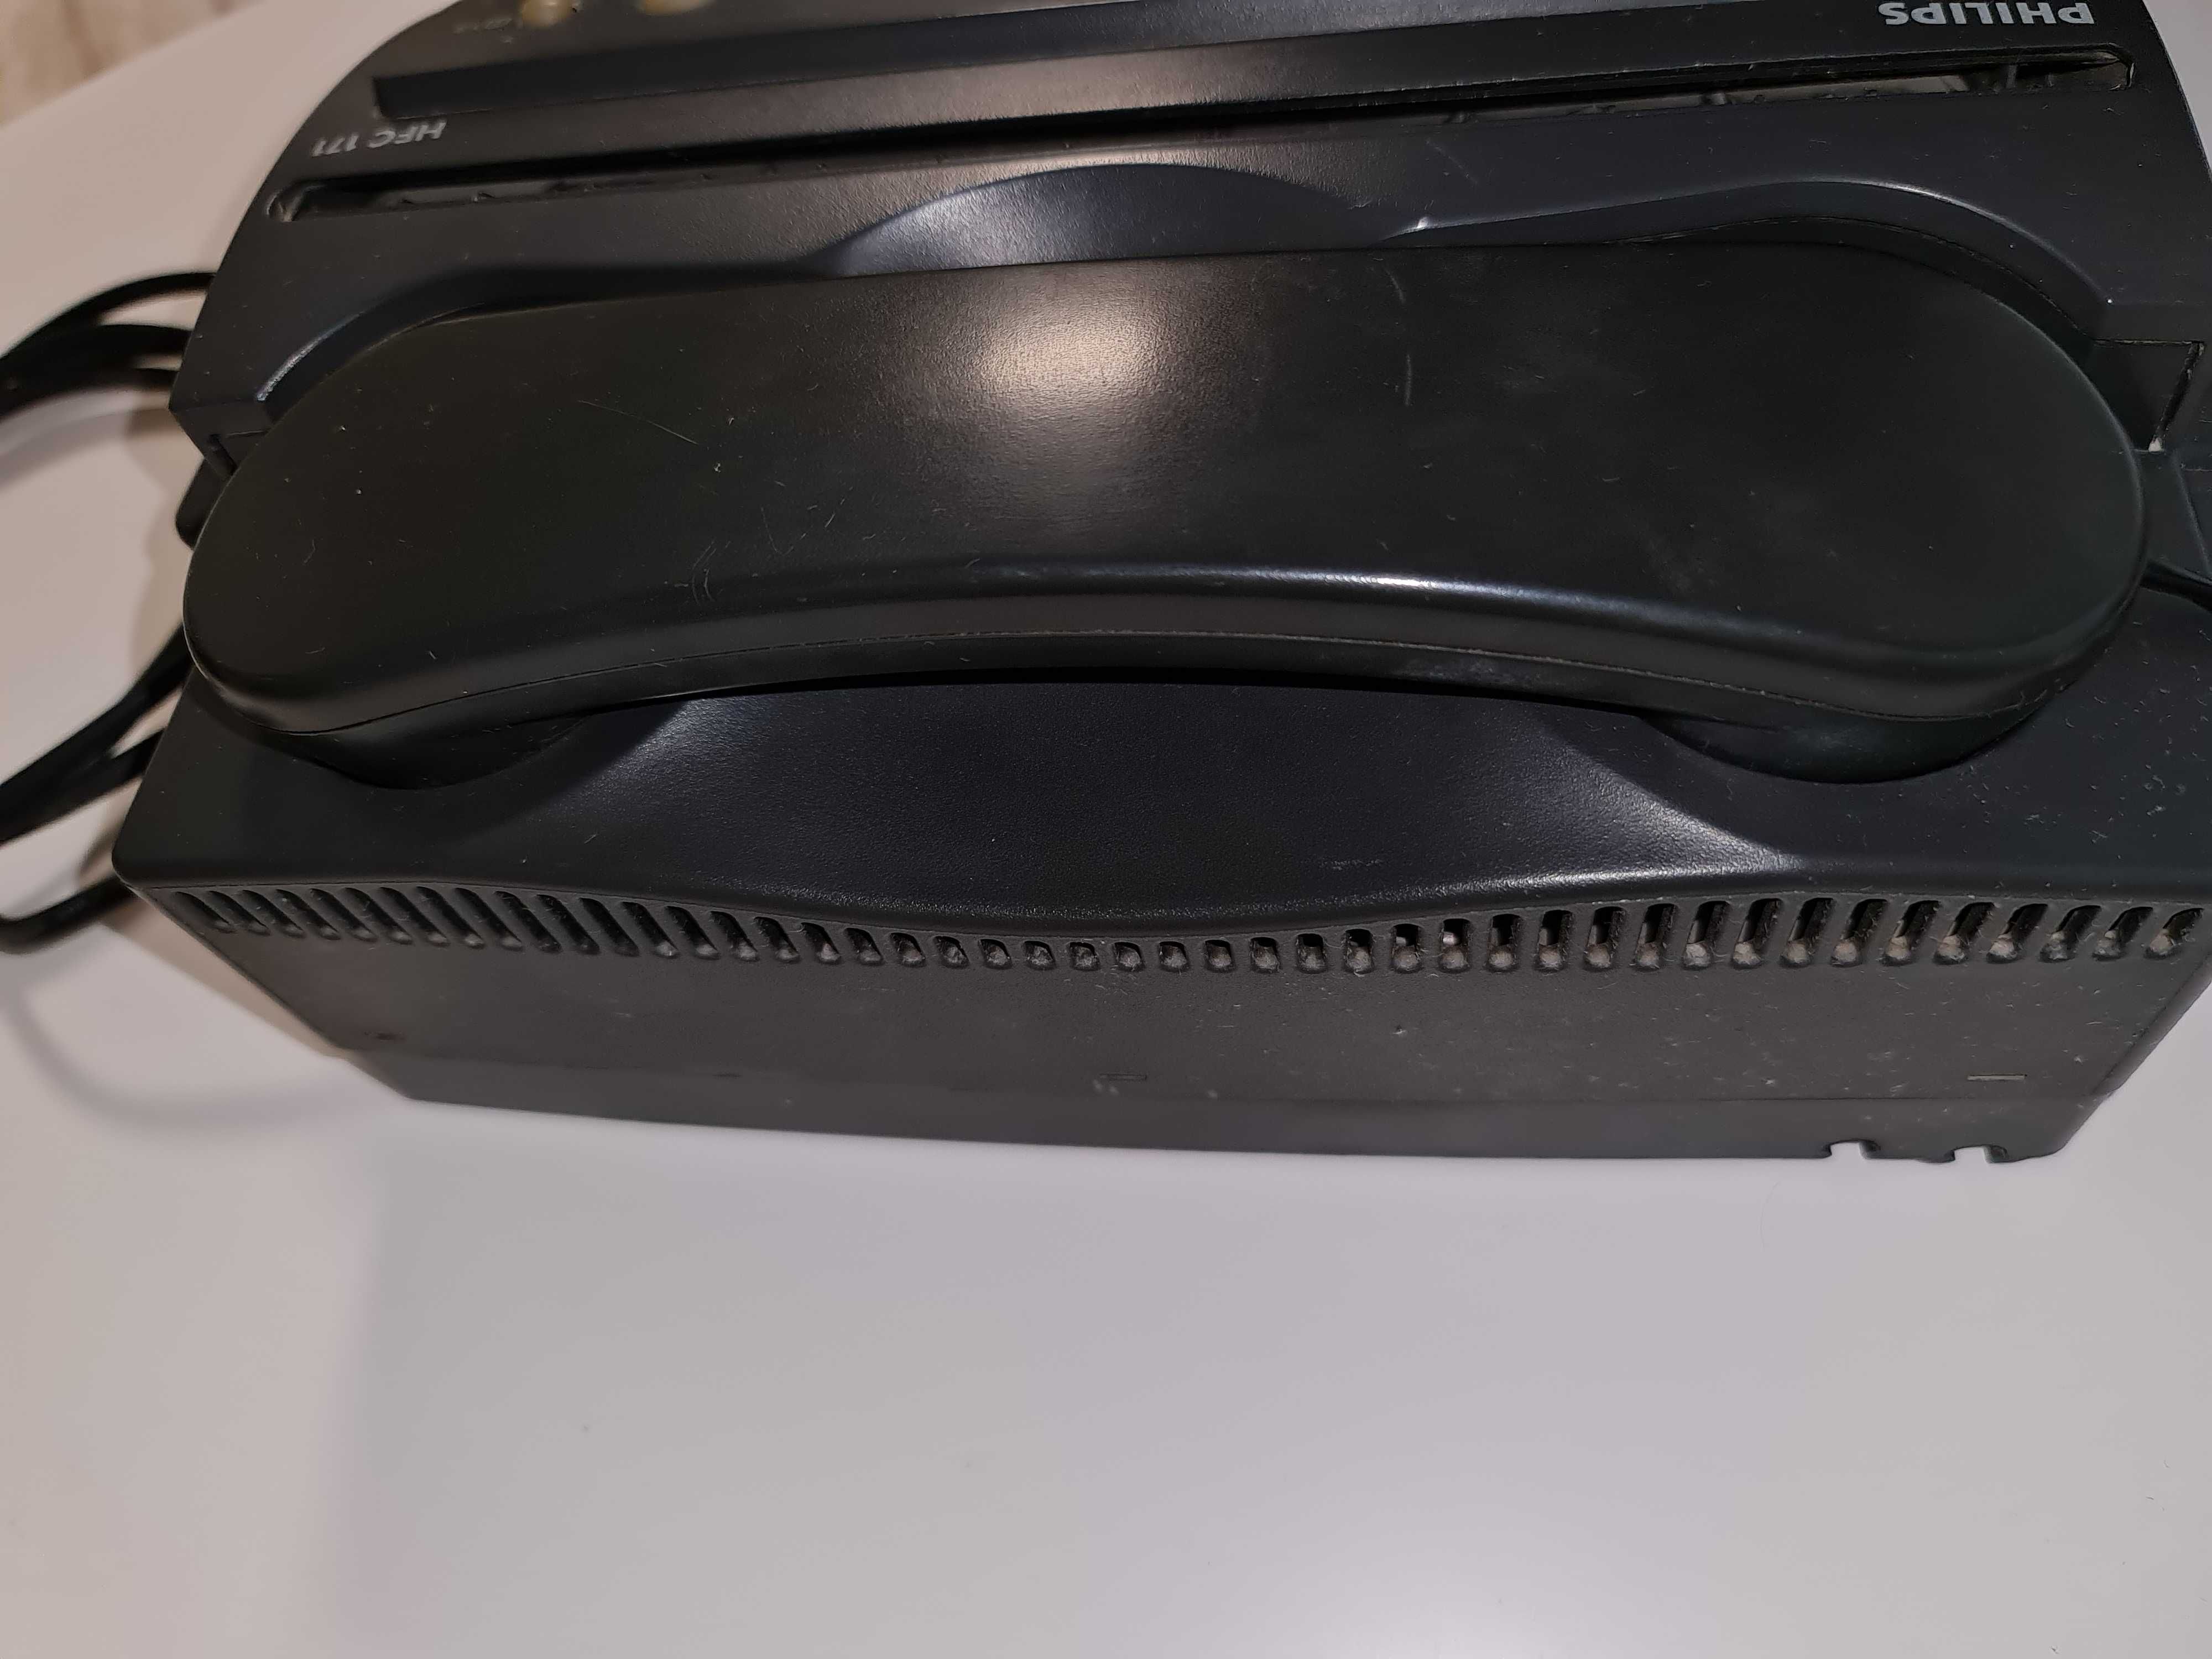 Philips HFC171 – telefon/fax/robot telefonic – cu hartie termica